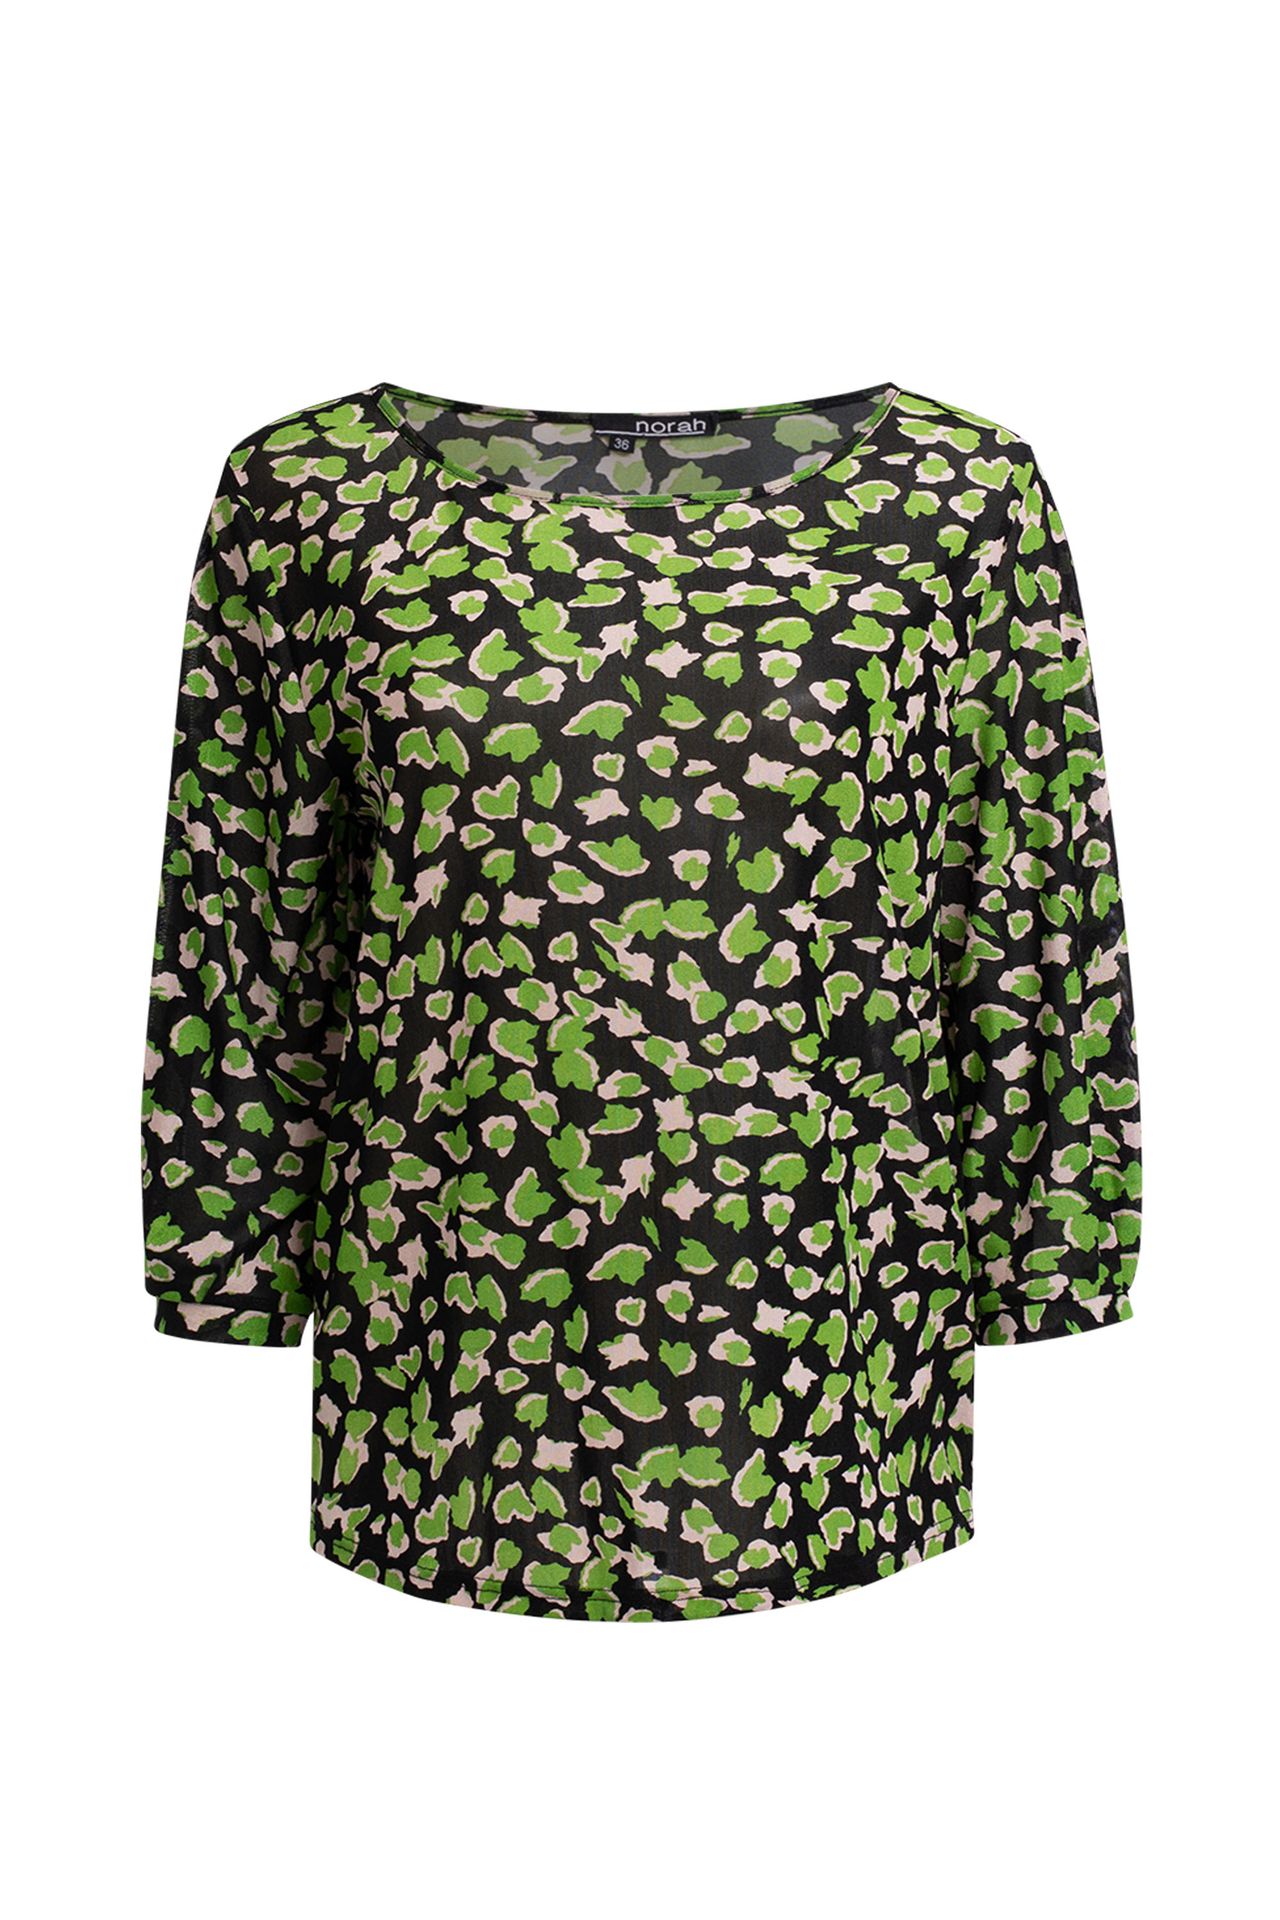 Norah Shirt zwart groen black multicolor 211137-020